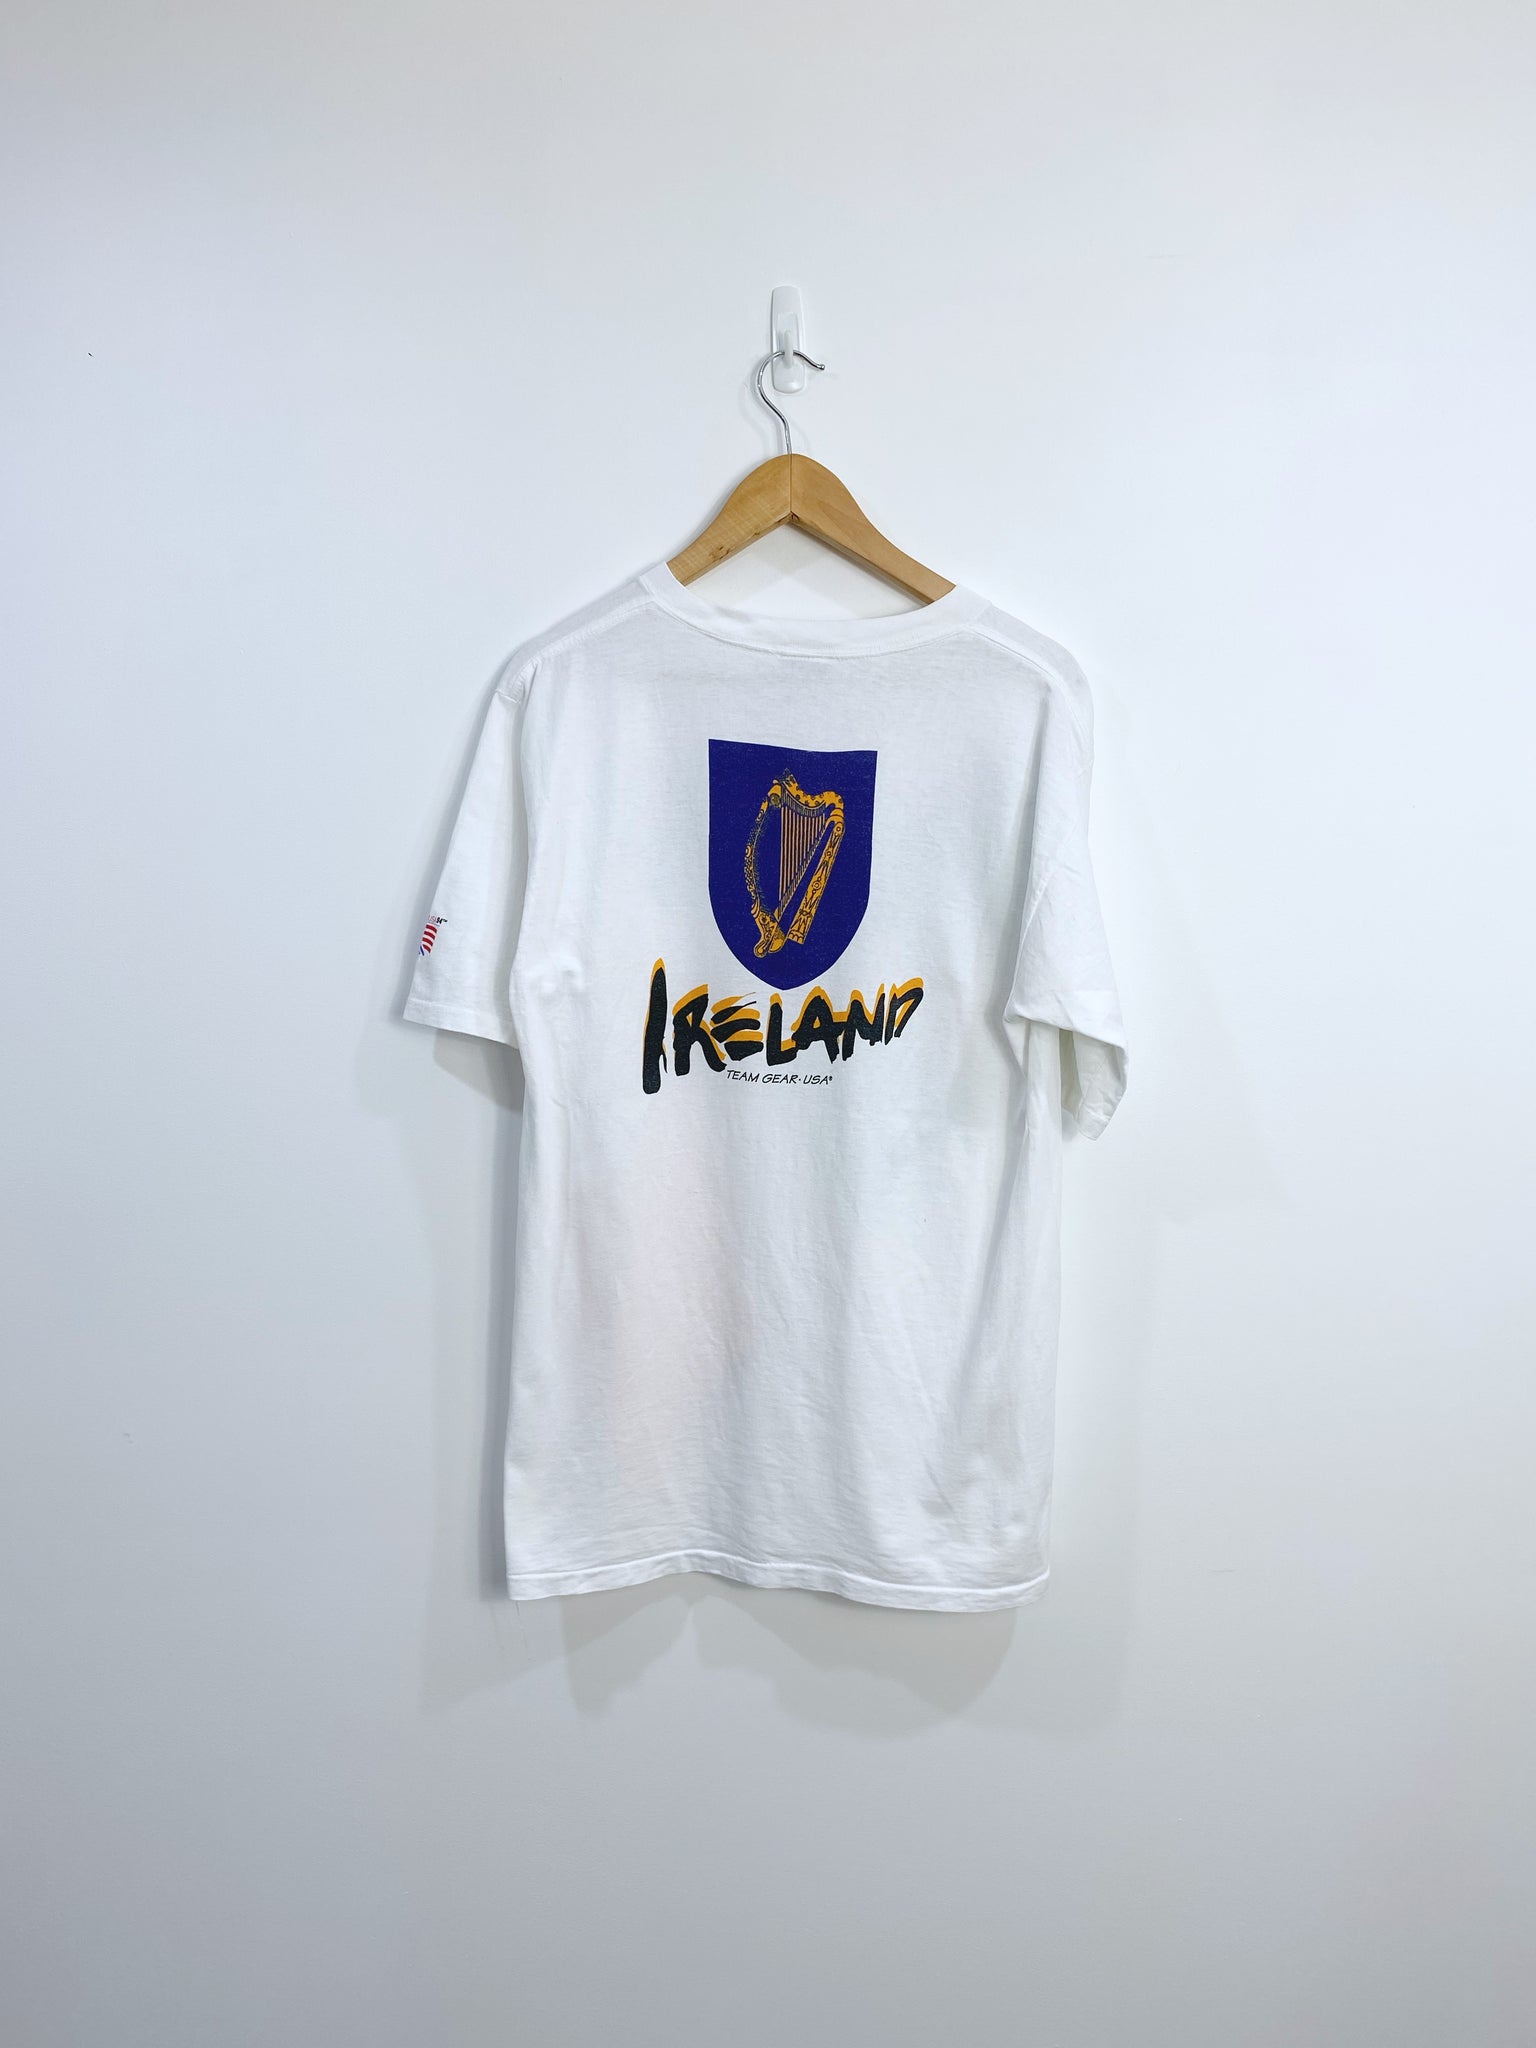 Vintage 1994 Ireland Sportswear T-shirt L